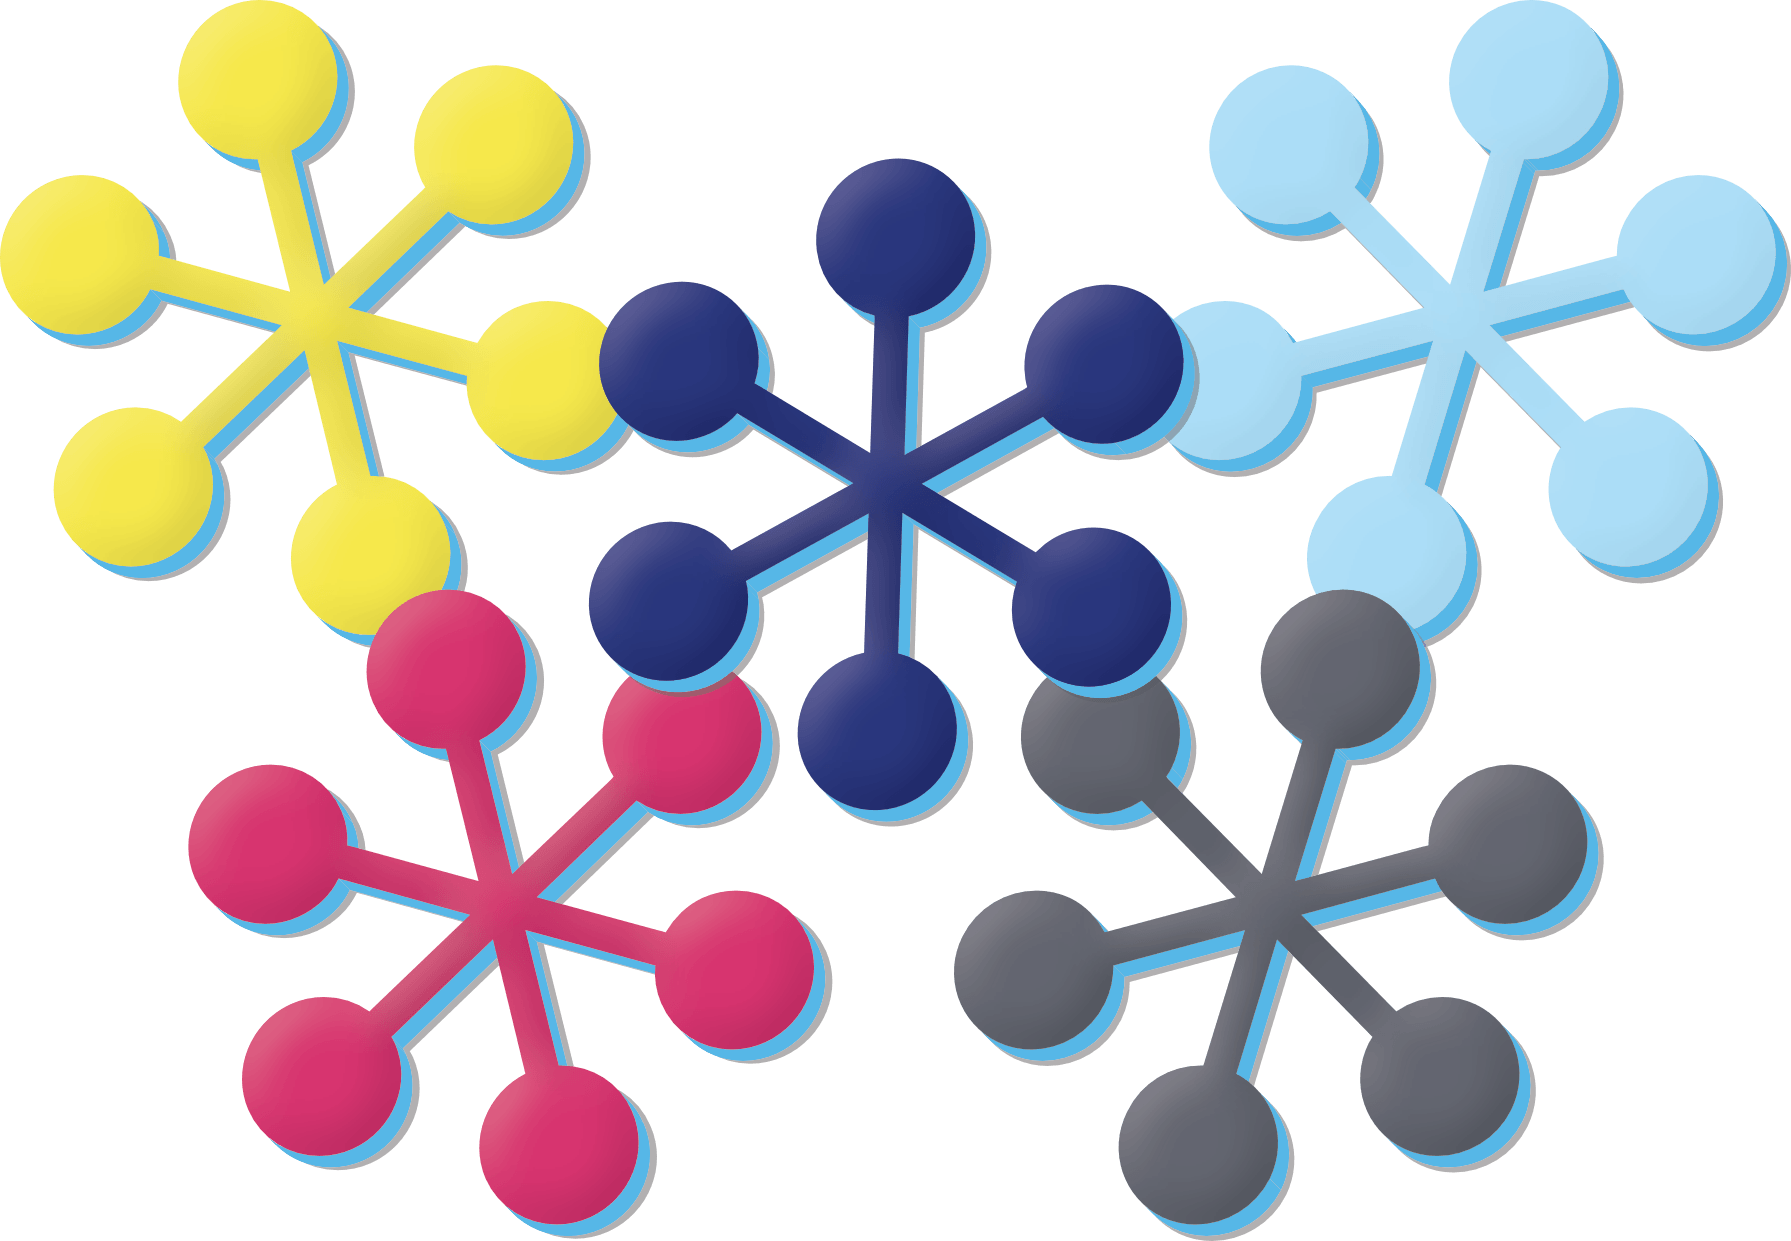 Snowflake Group